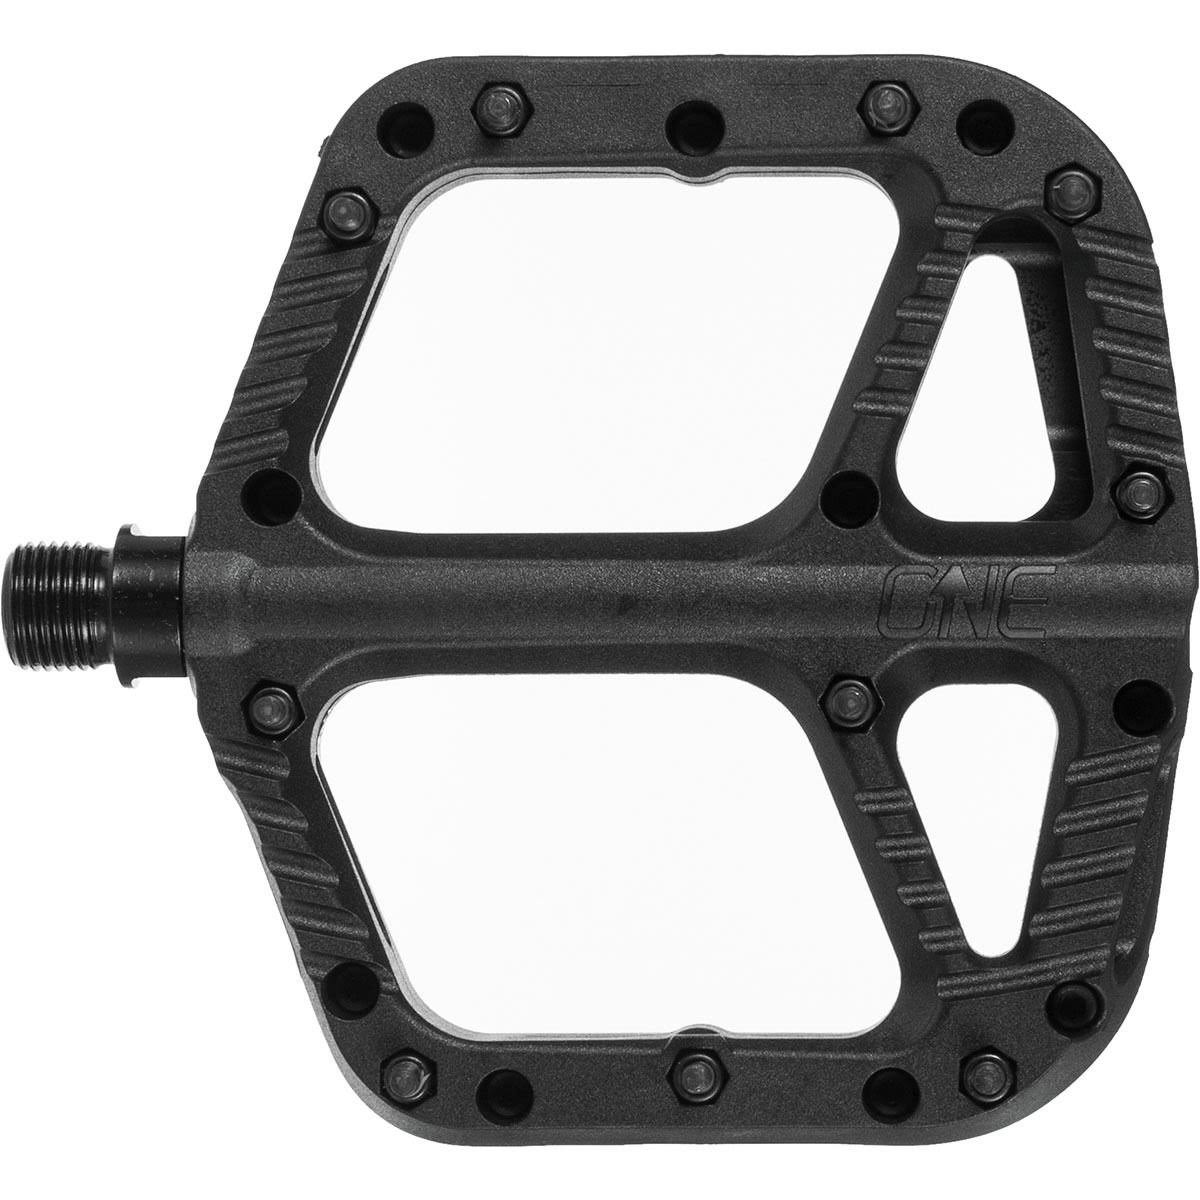 ONEUP Components Composite Pedals Black